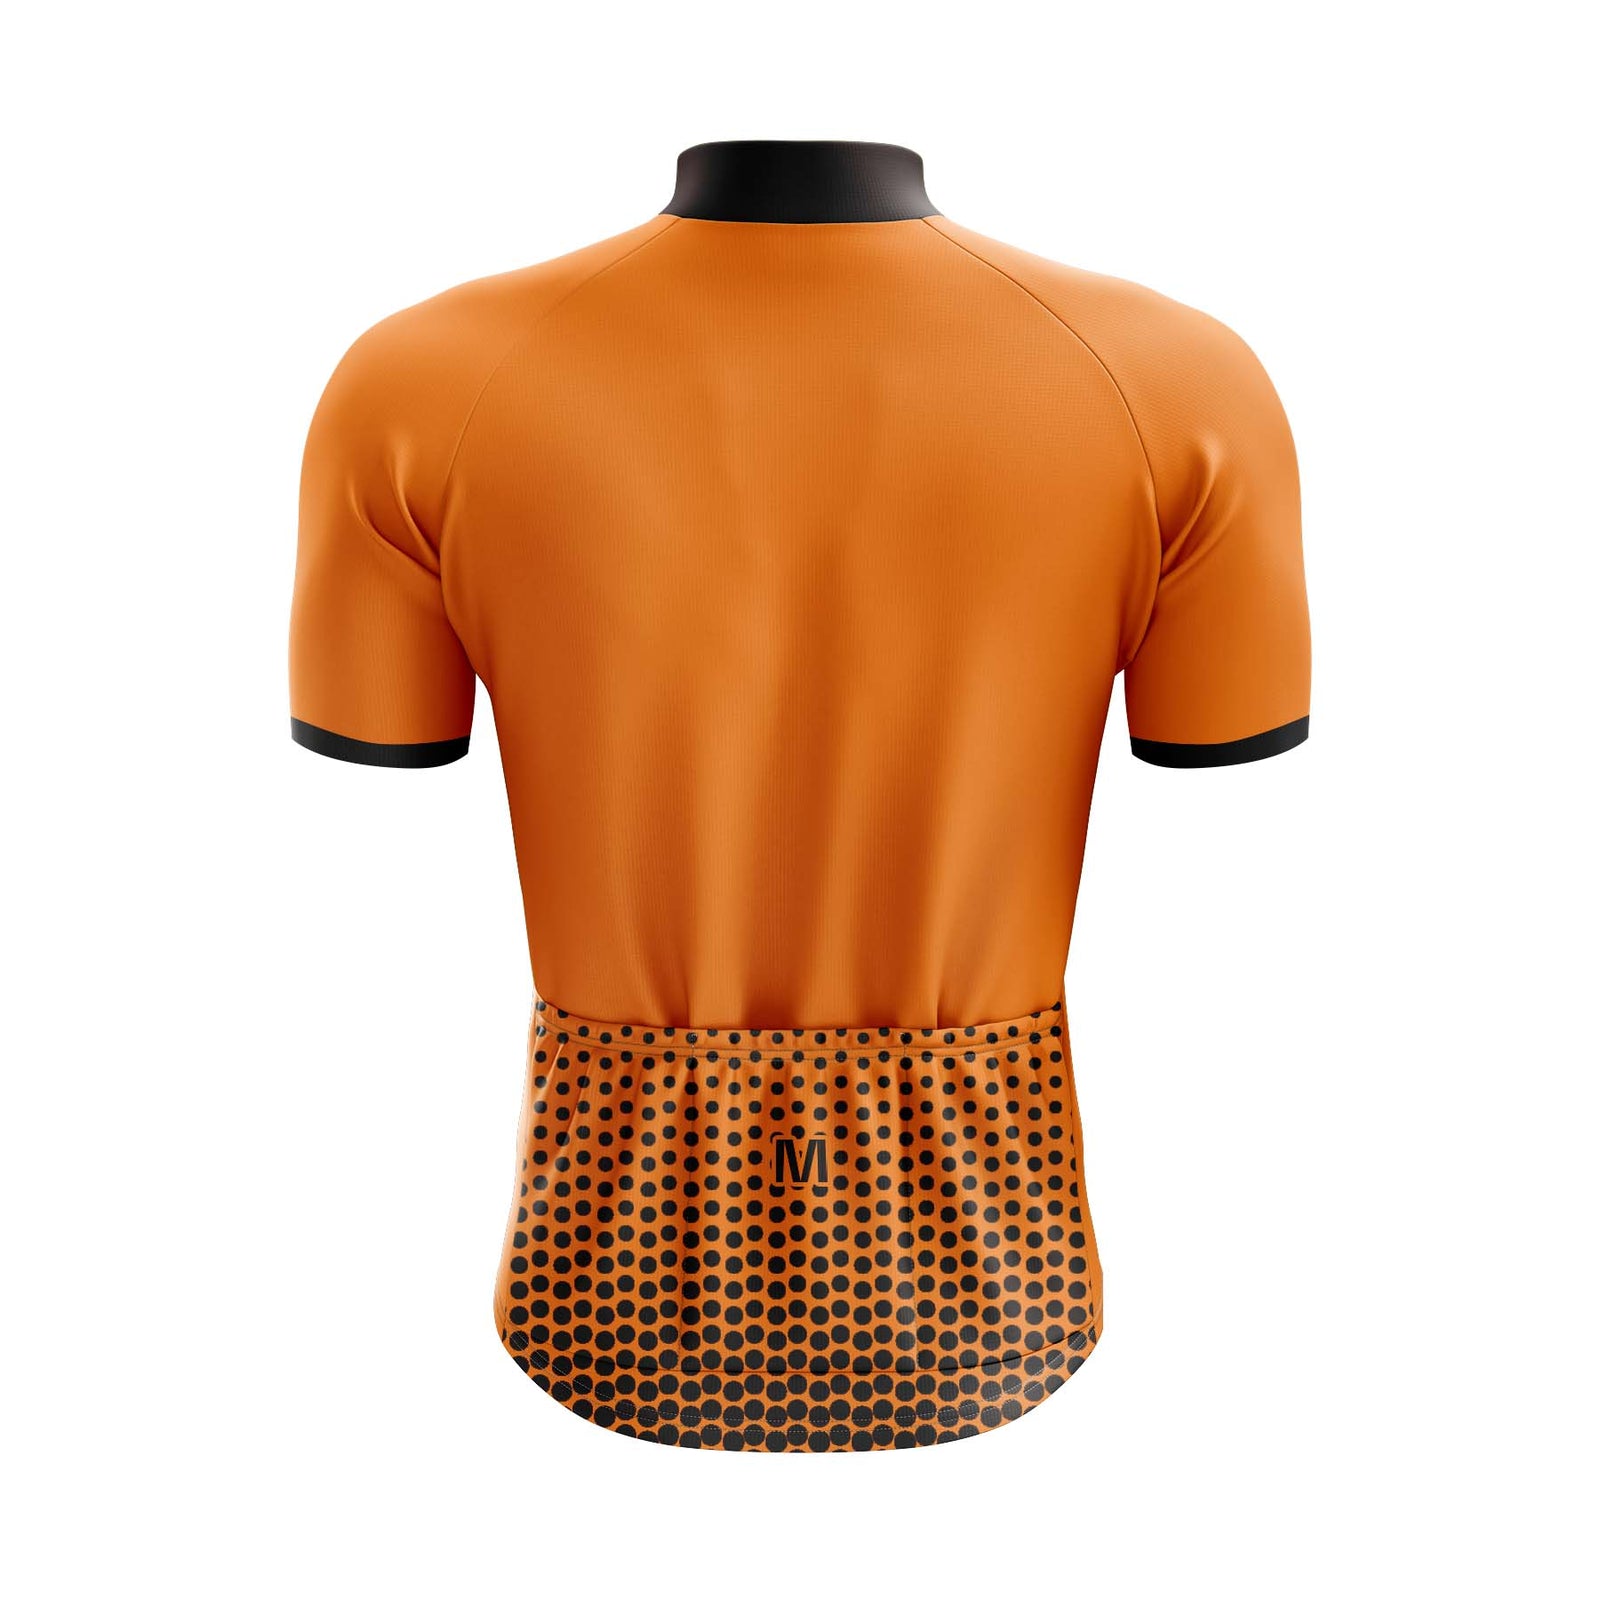 Montella Cycling Cycling Kit Men's Orange Ride Cycling Jersey or Bib Shorts